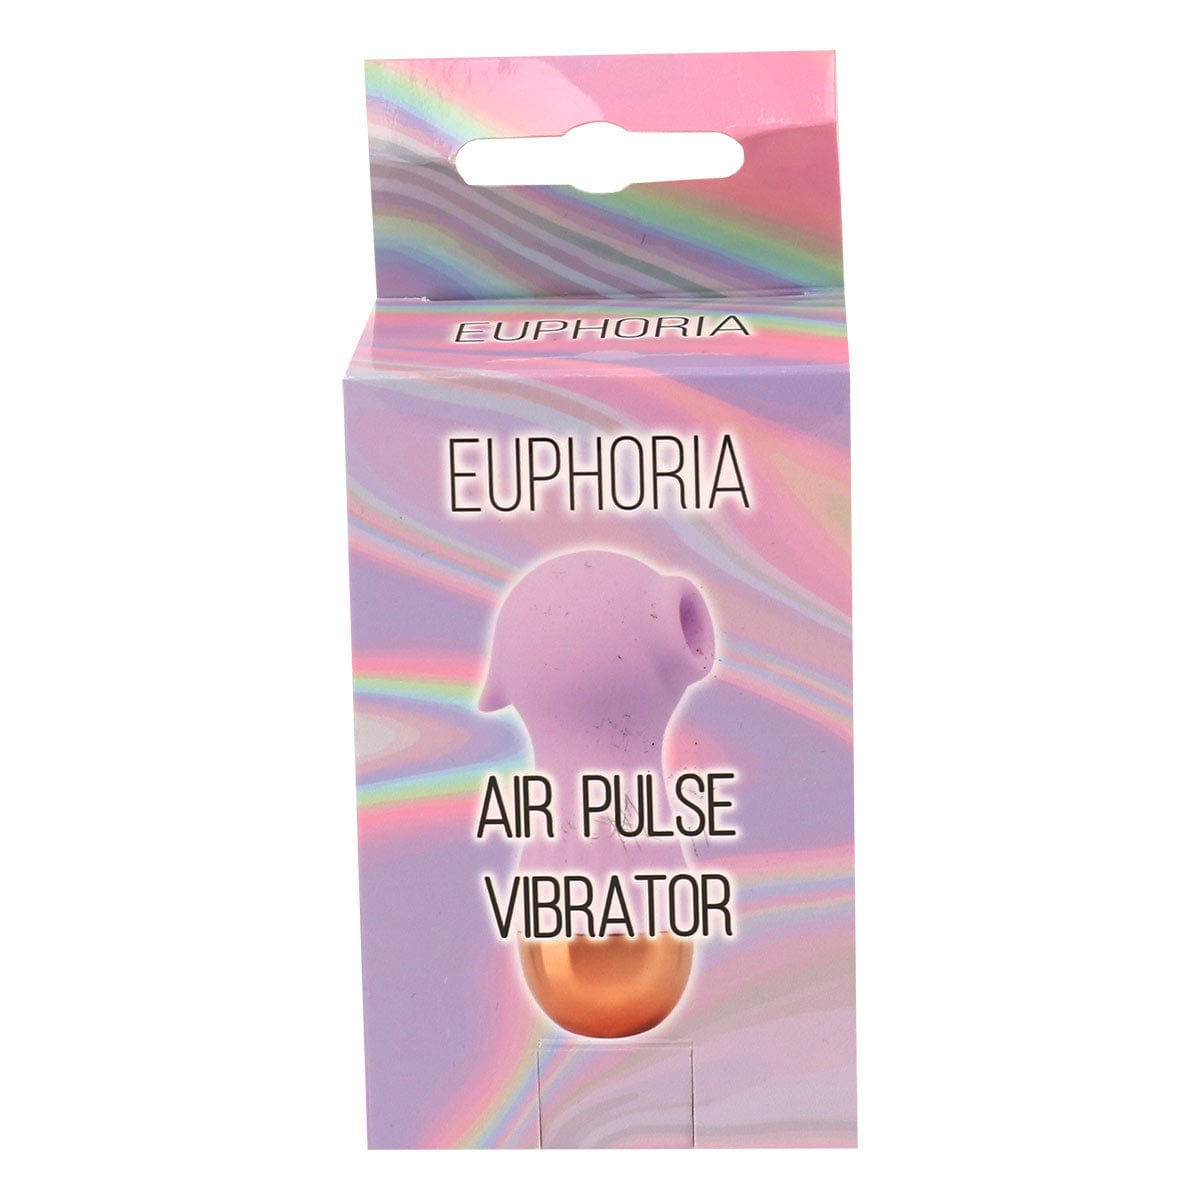 Air Pulse Vibrator For Women